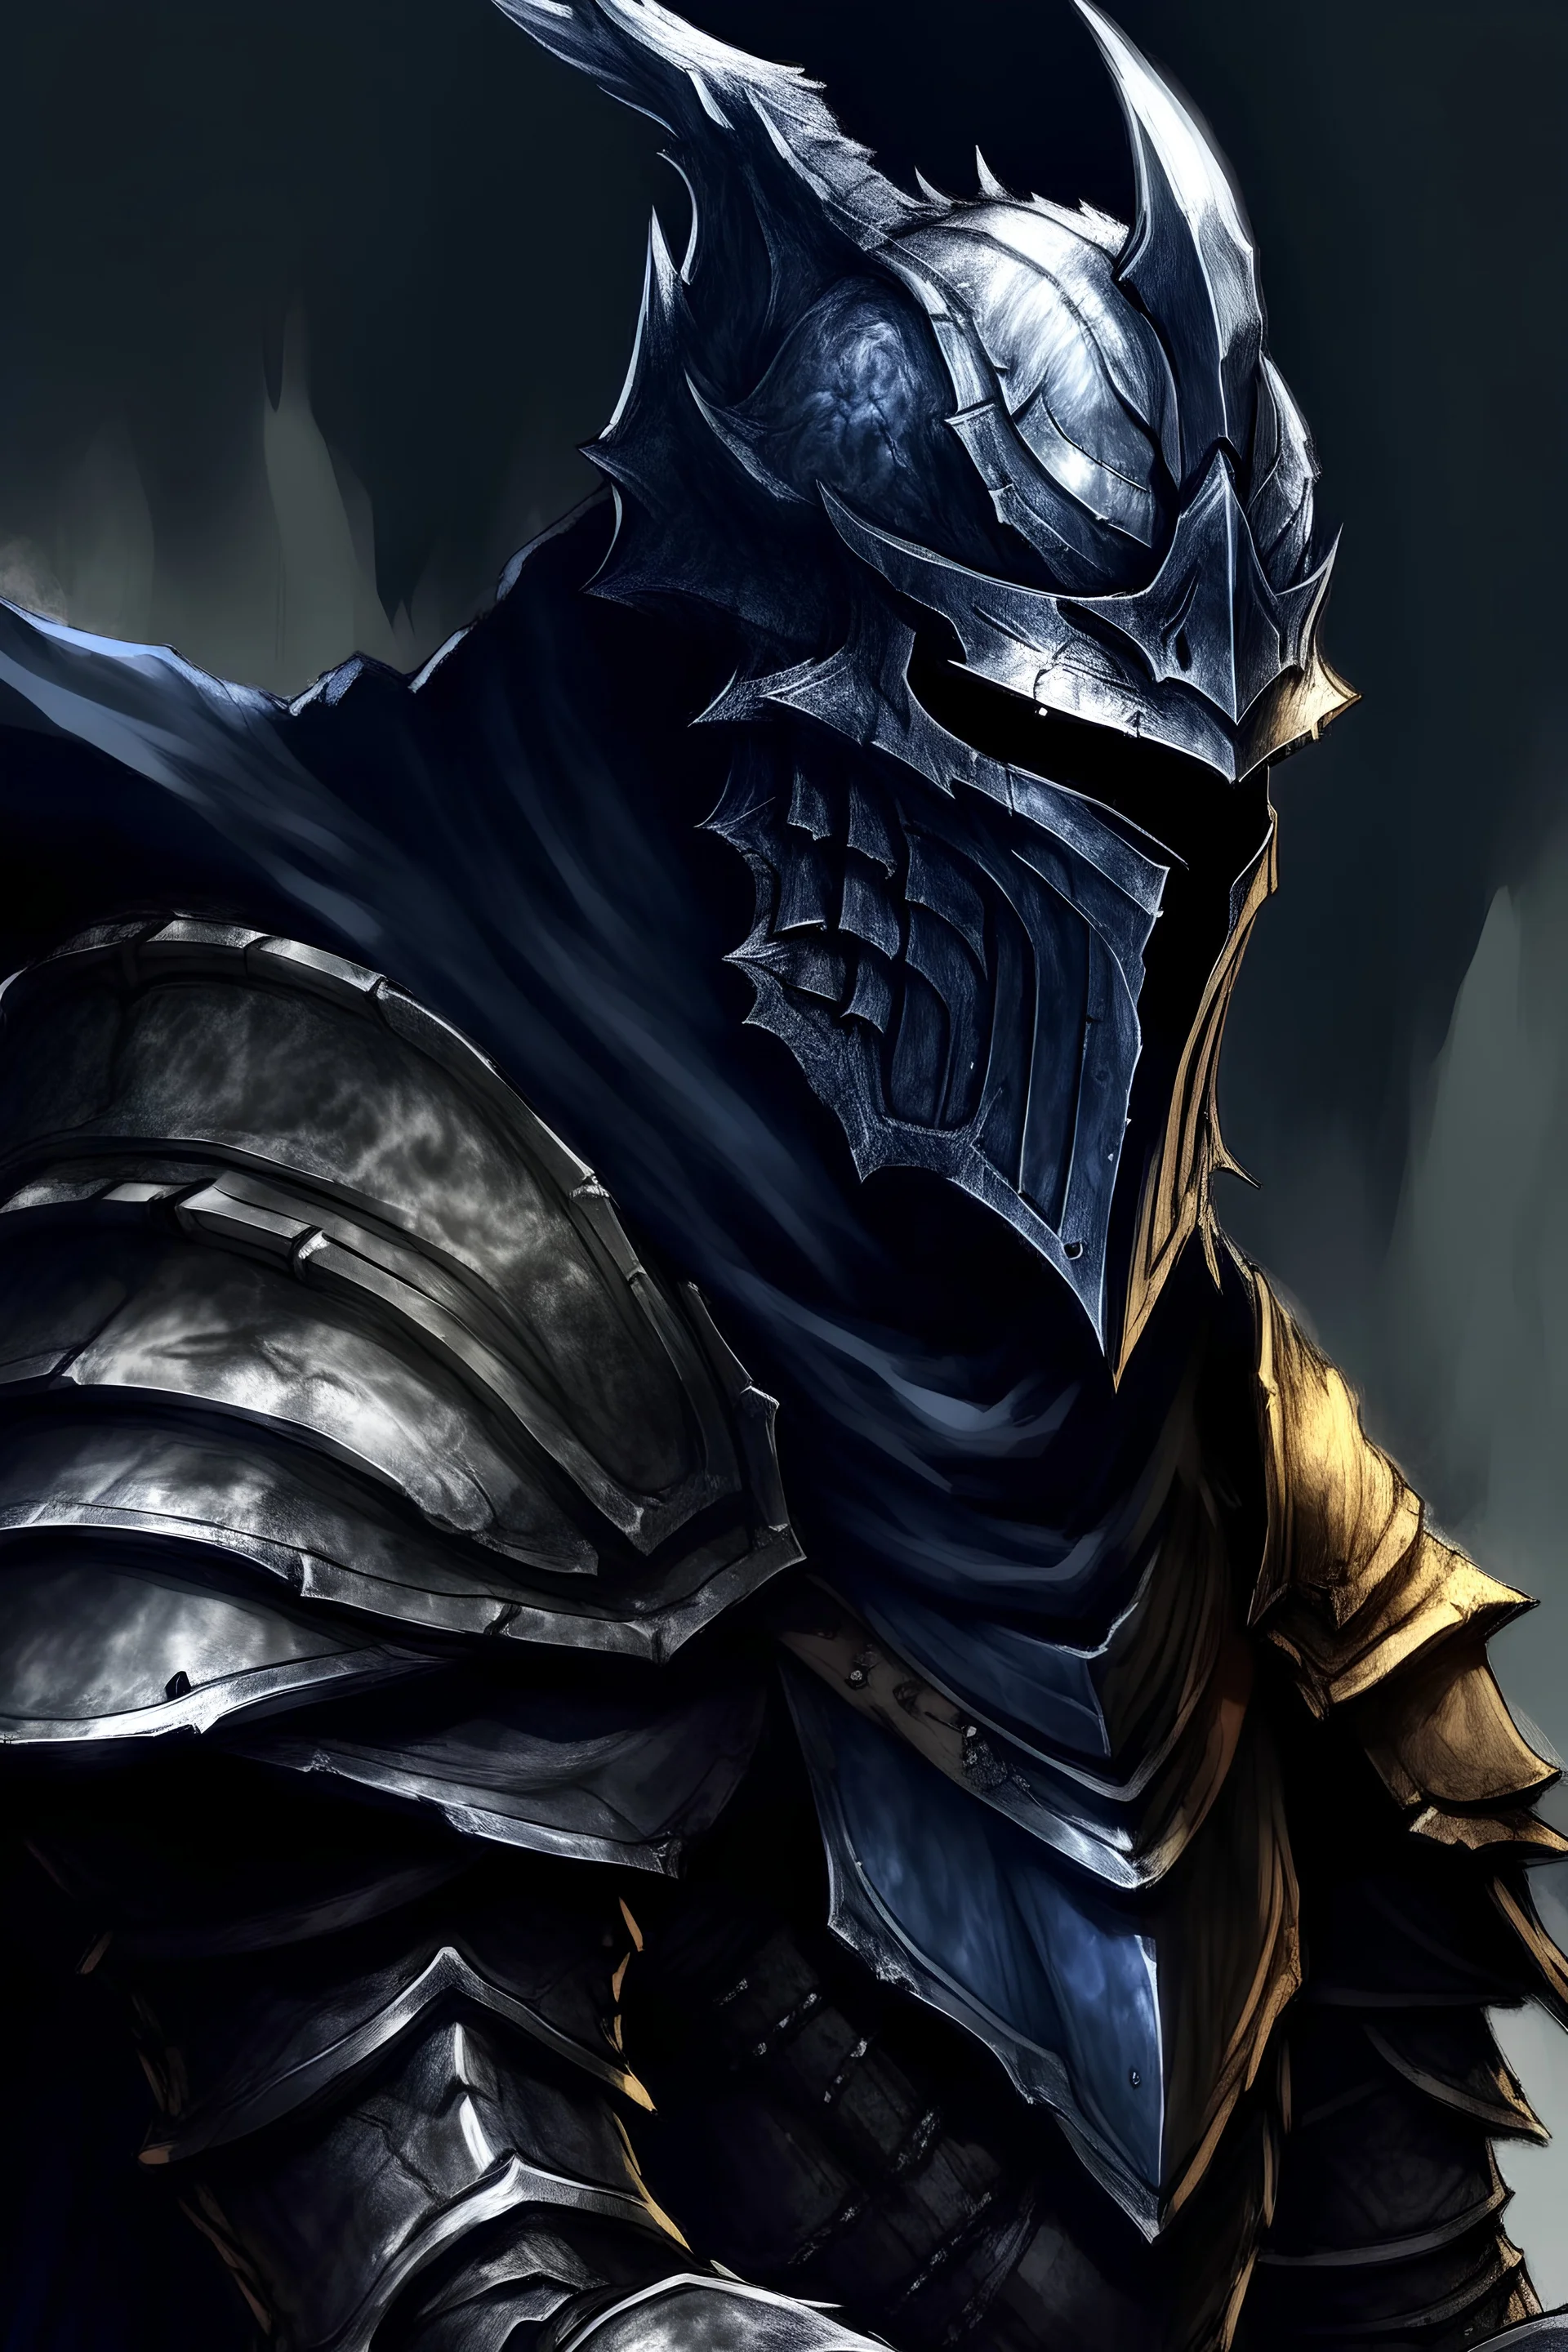 Portrait of Artorias, from Dark Souls game